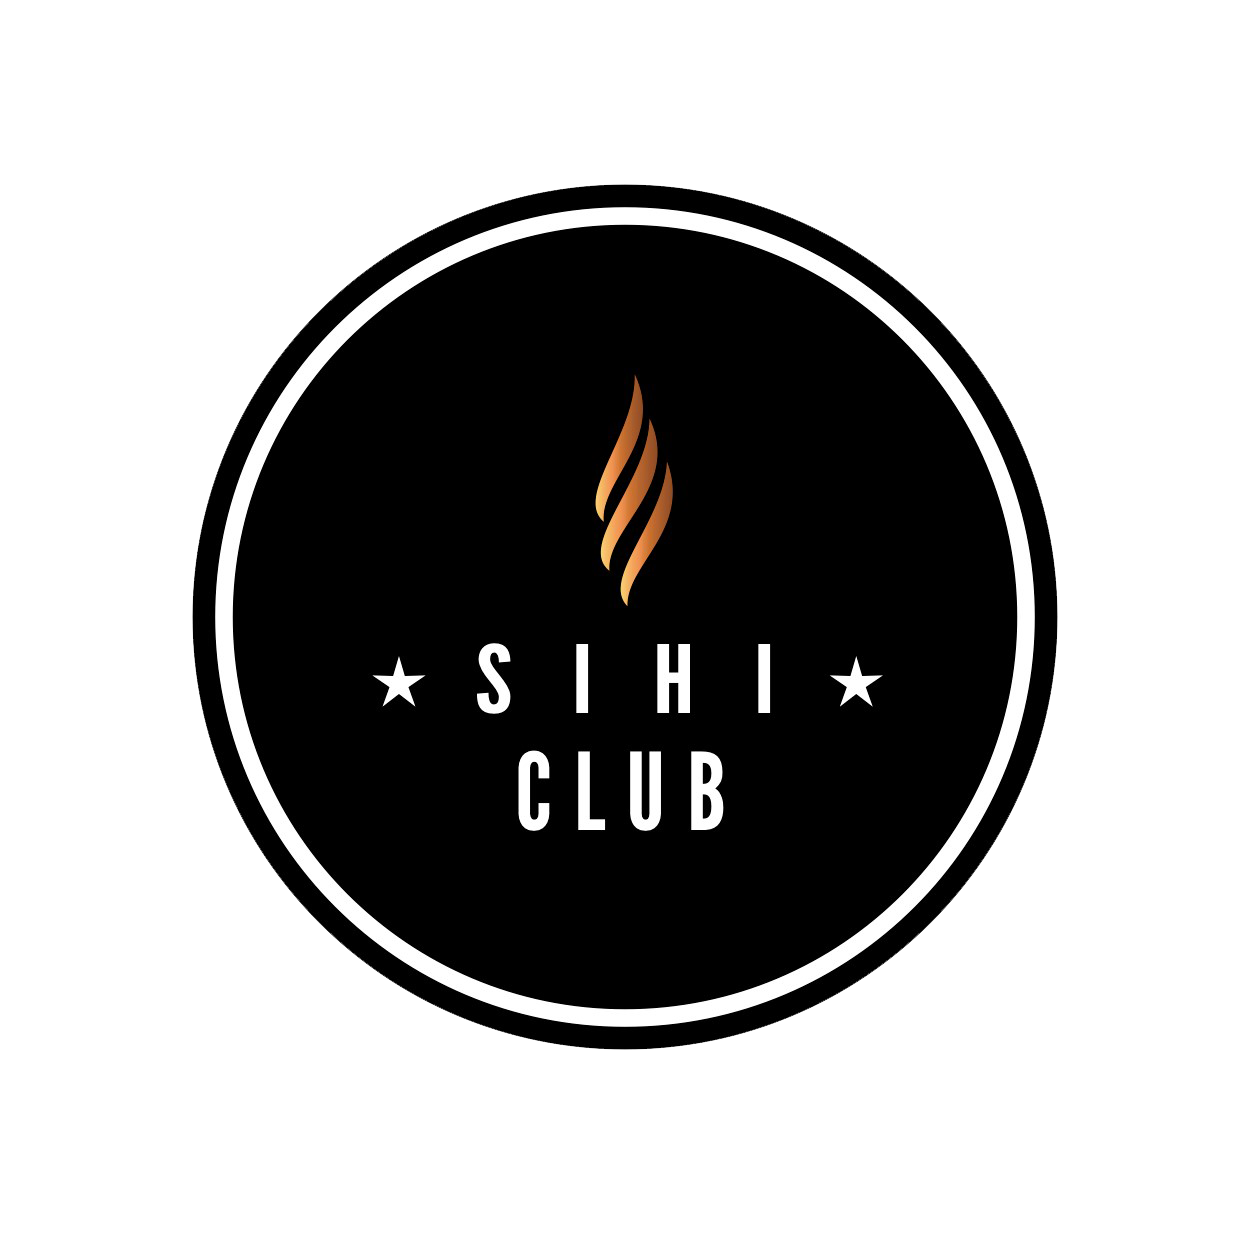 Sihi club